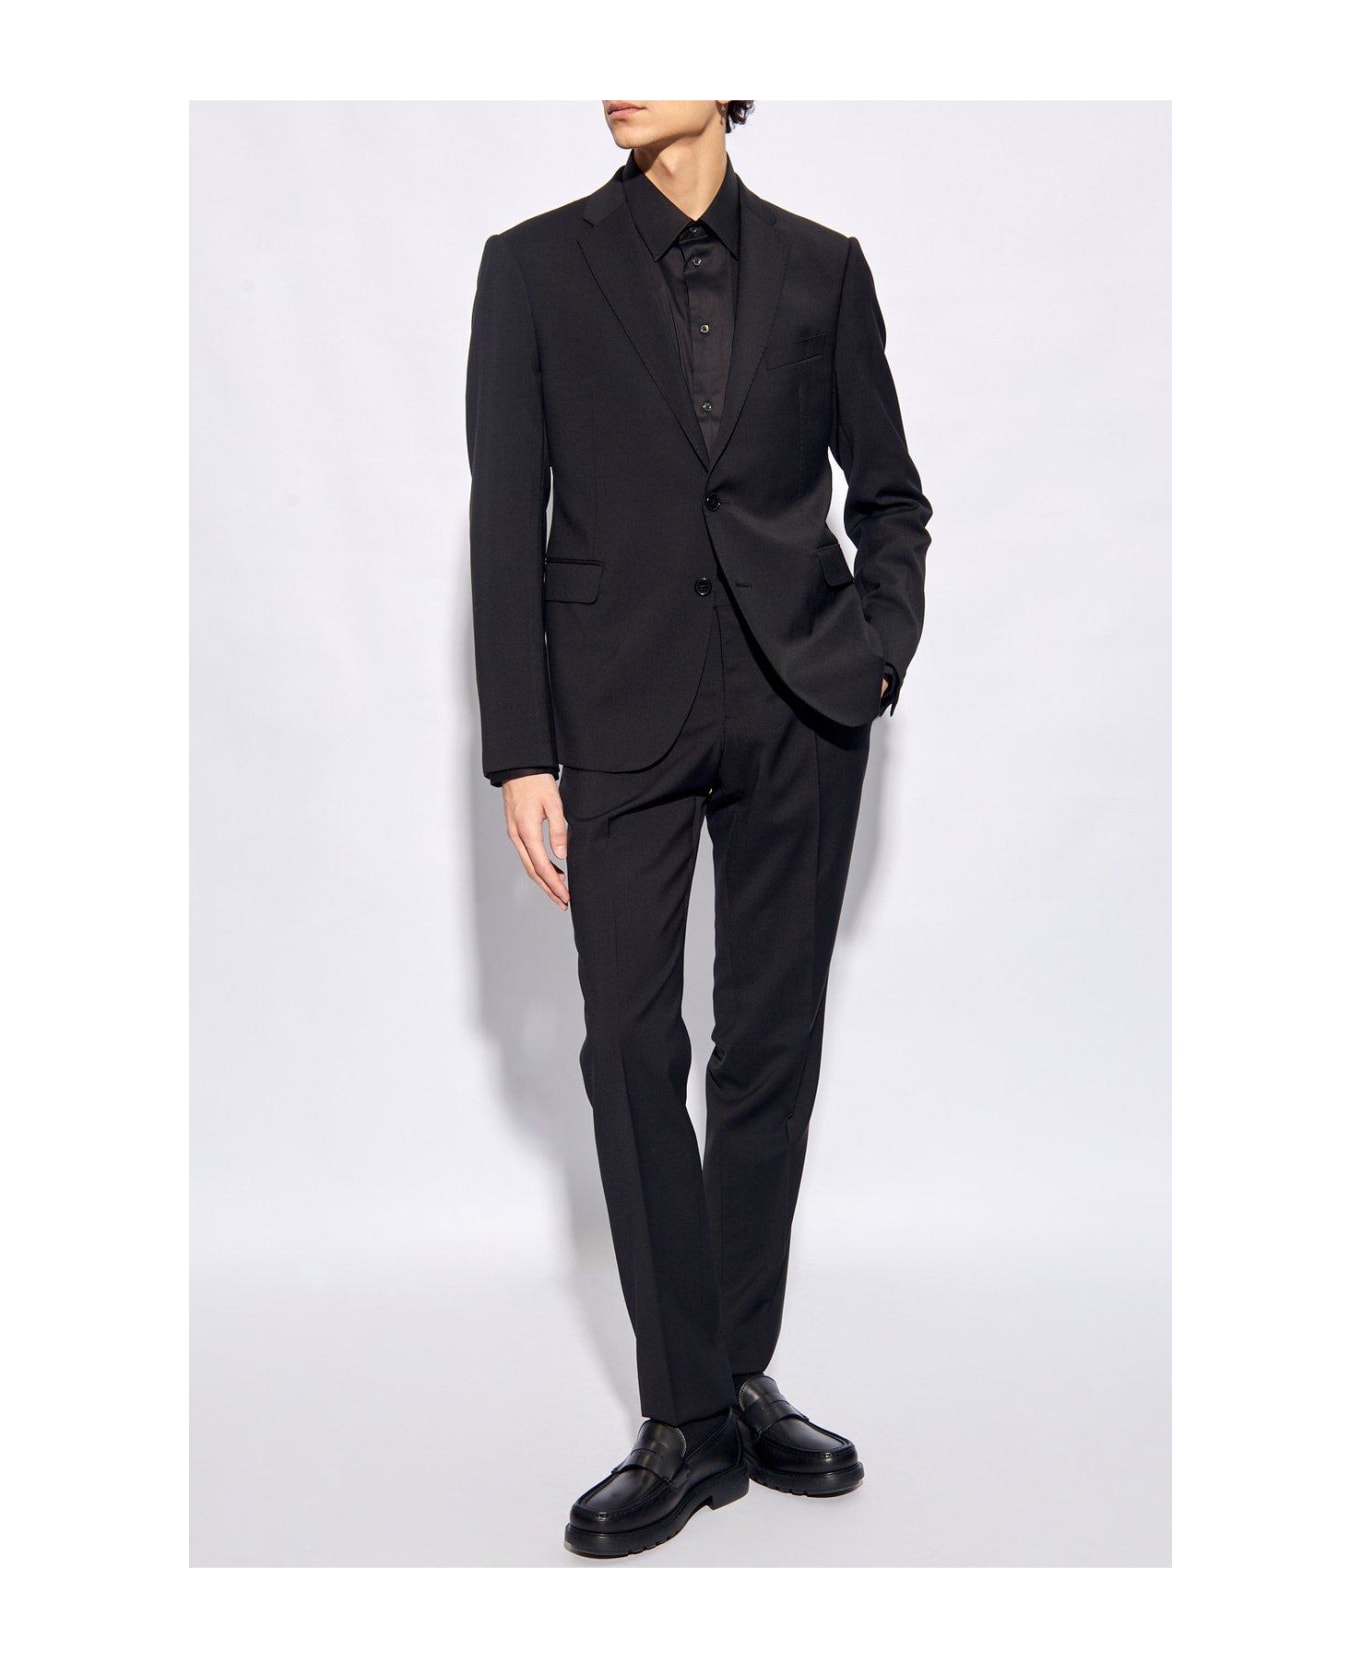 Emporio Armani Wool Suit - Black